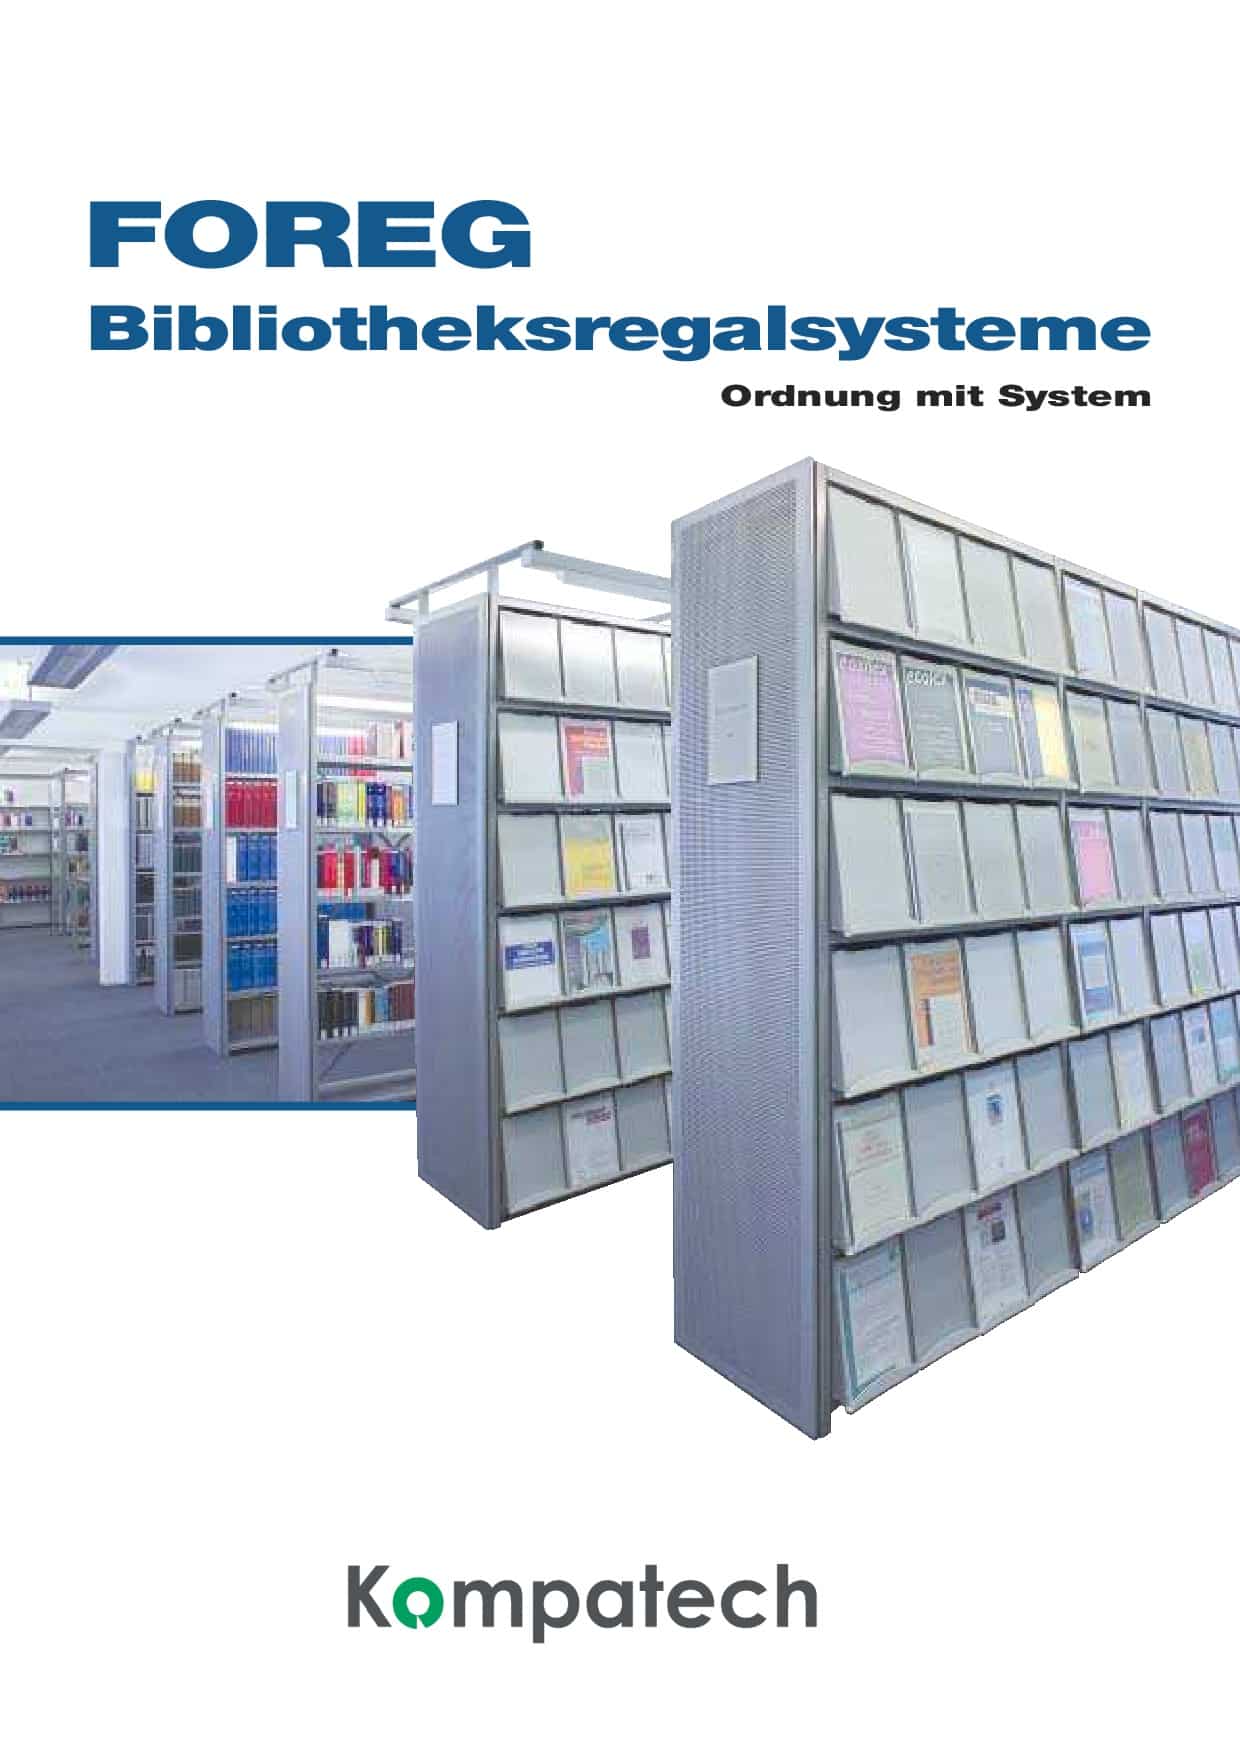 Bibliothek Rollregal katalog foreg bibliotheksregalsyseme